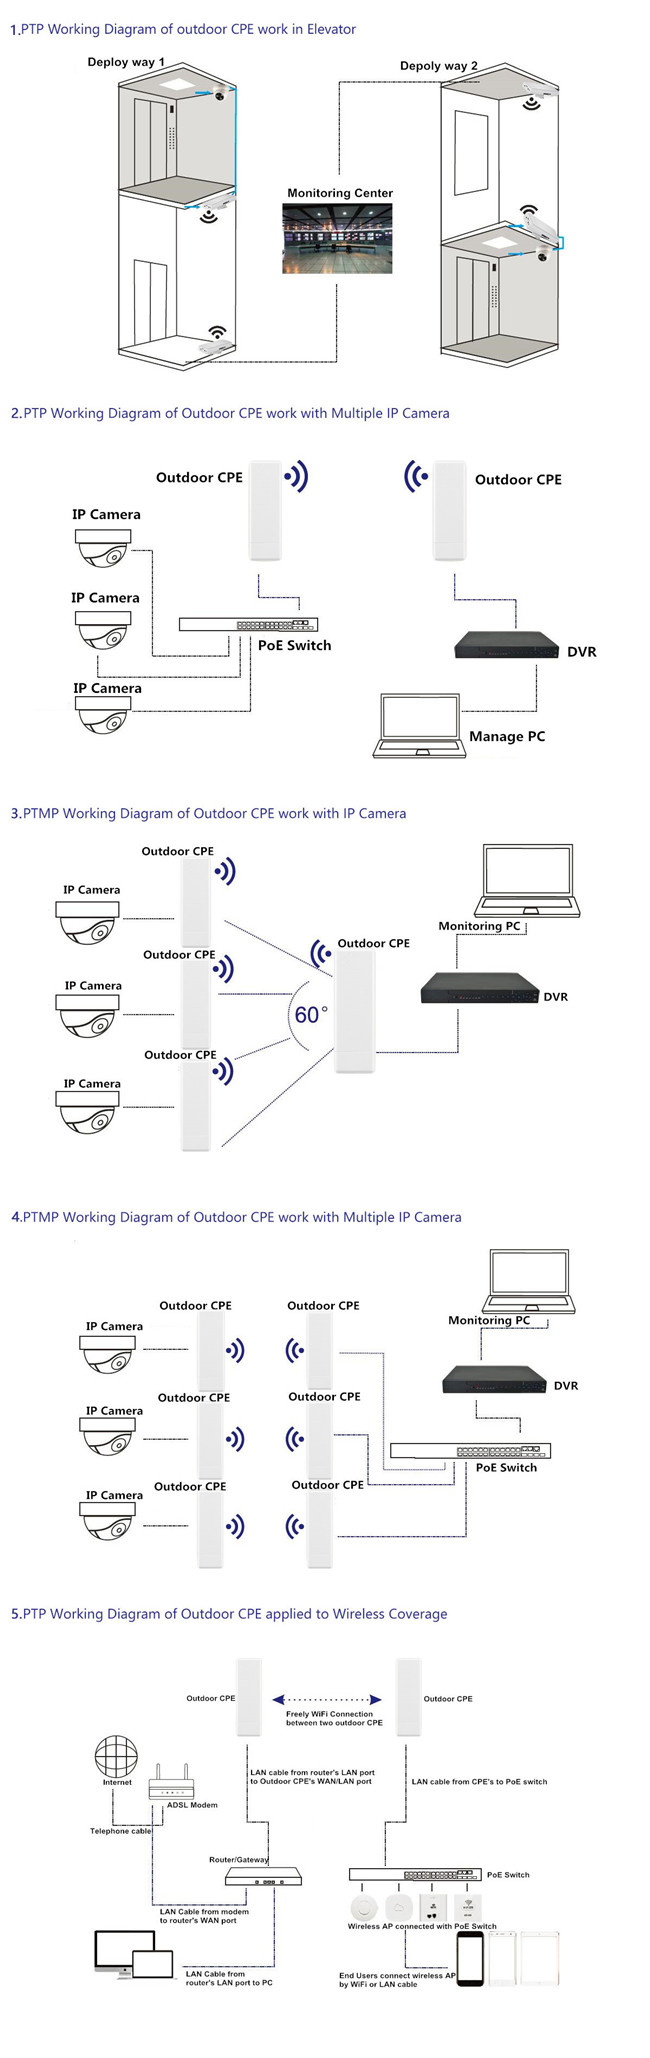 Qualcomm 해결책 옥외 CPE 2.4 GHz의 옥외 클라이언트 무선 와이파이 교량